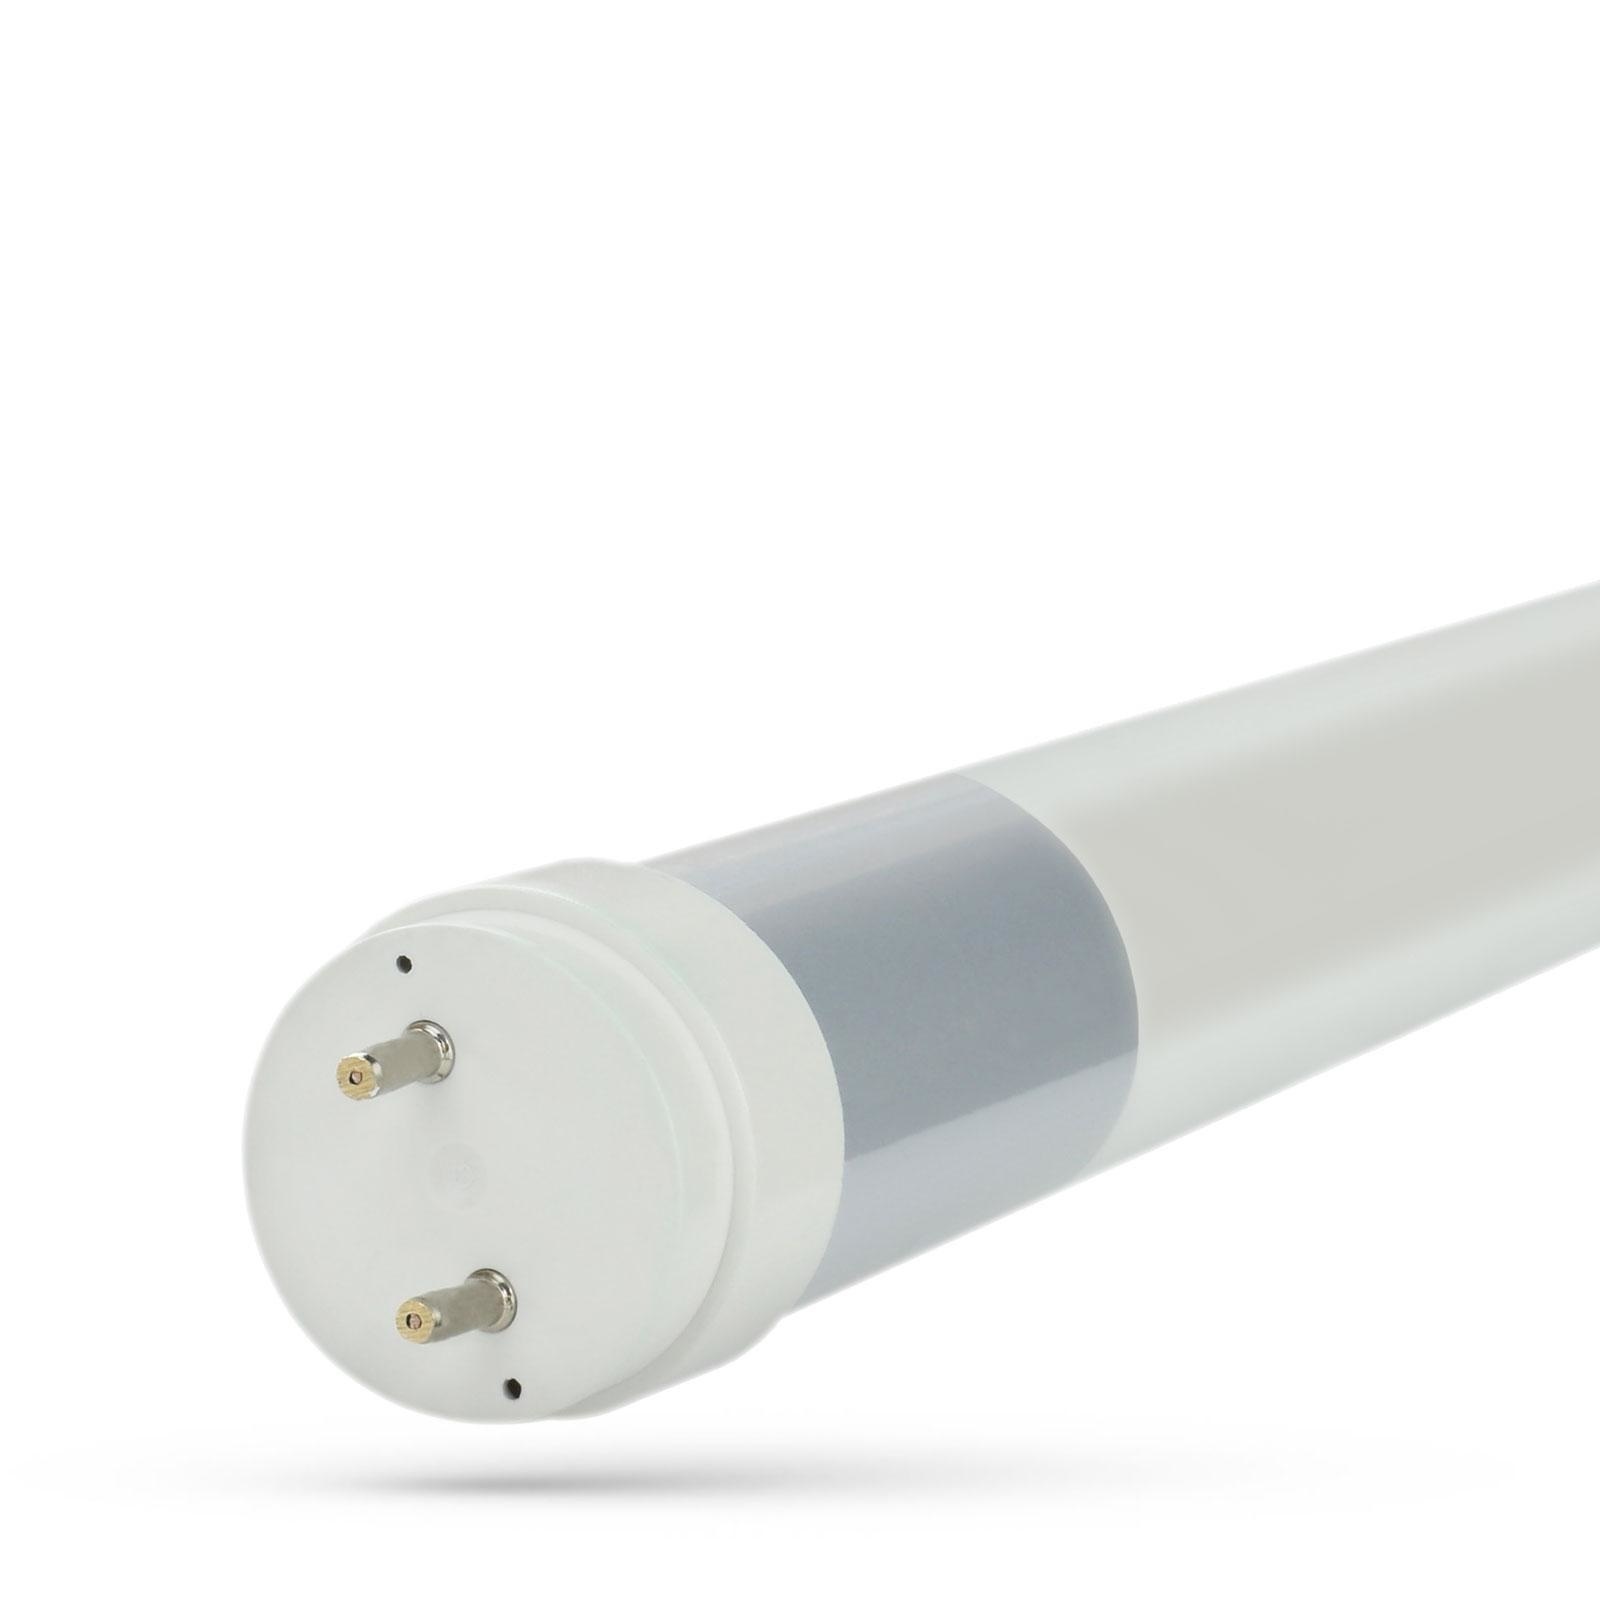 pureled 2er Pack LED Röhre 120cm - GLAS T8 G13 - warmweiß (3000K) - 18W  (ersetzt 36W) - 1800 Lumen - inklusive Starter - Leuchtstoffröhre Neonröhre  Röhrenlampe LED-Tube : : Beleuchtung